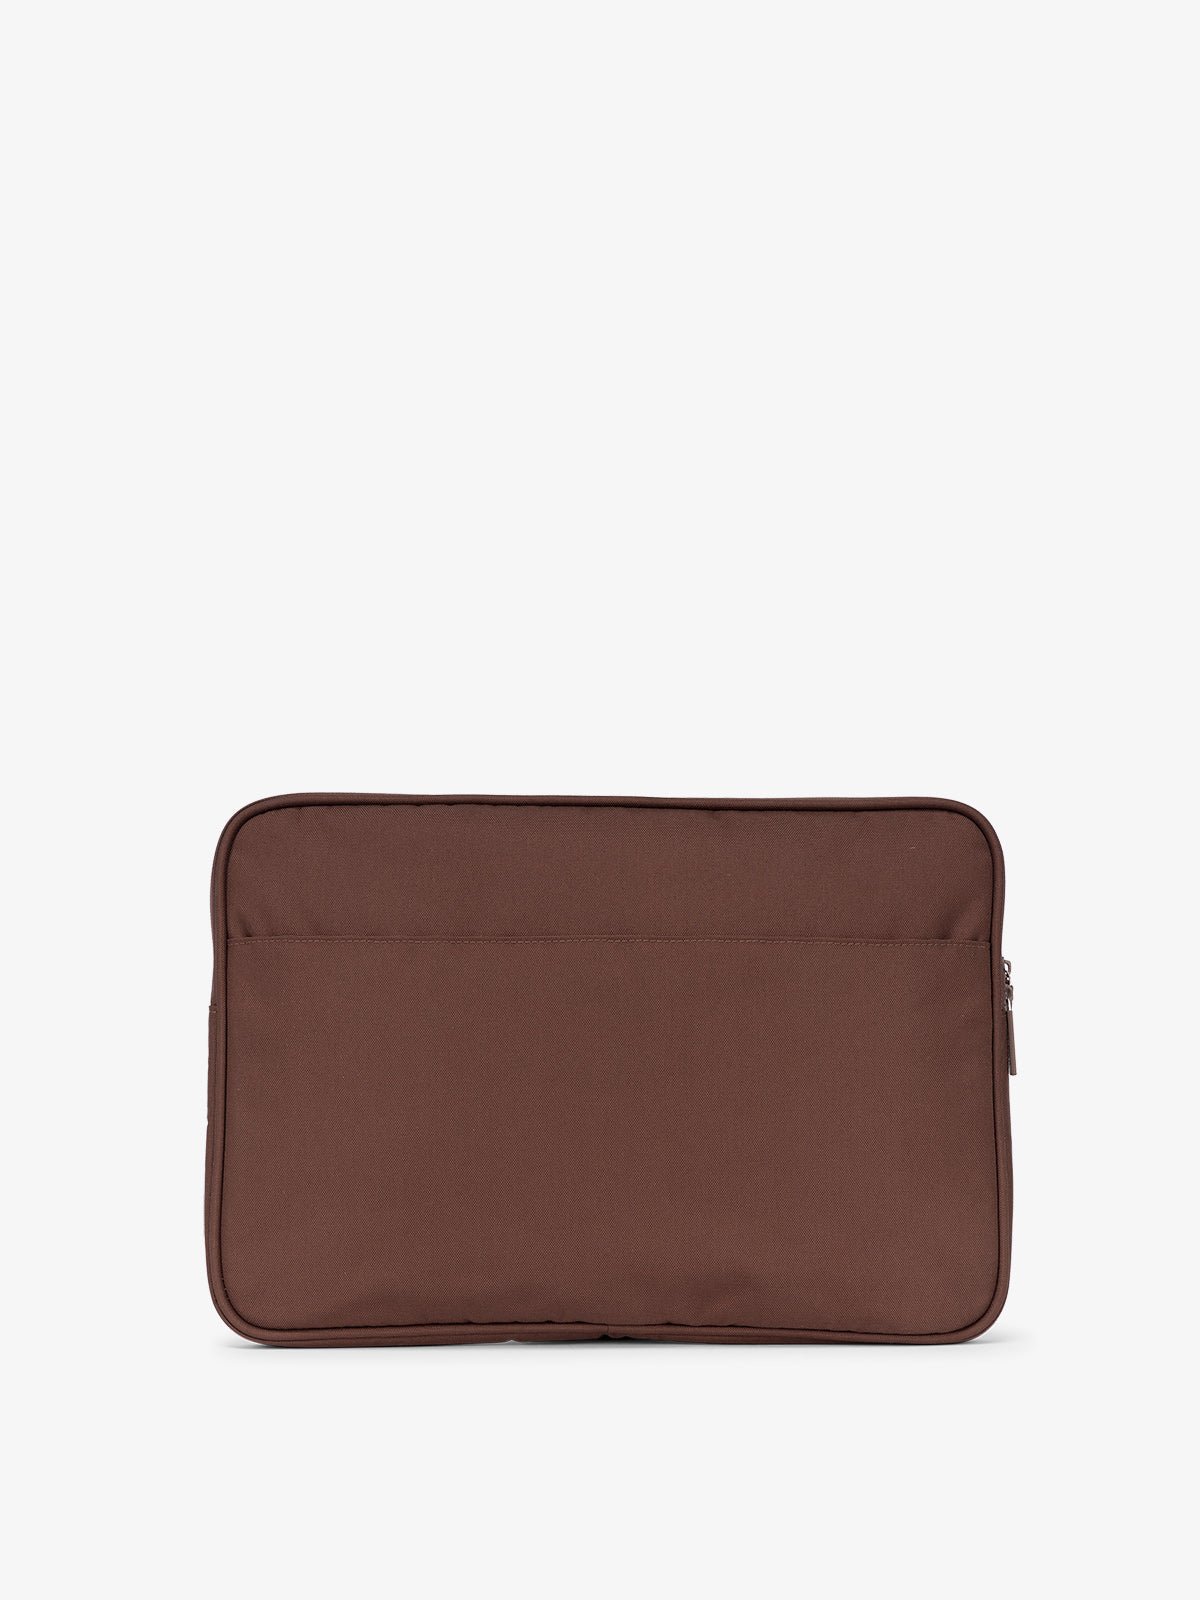 CALPAK 15-17 Inch water resistant laptop case with back slip pocket in walnut